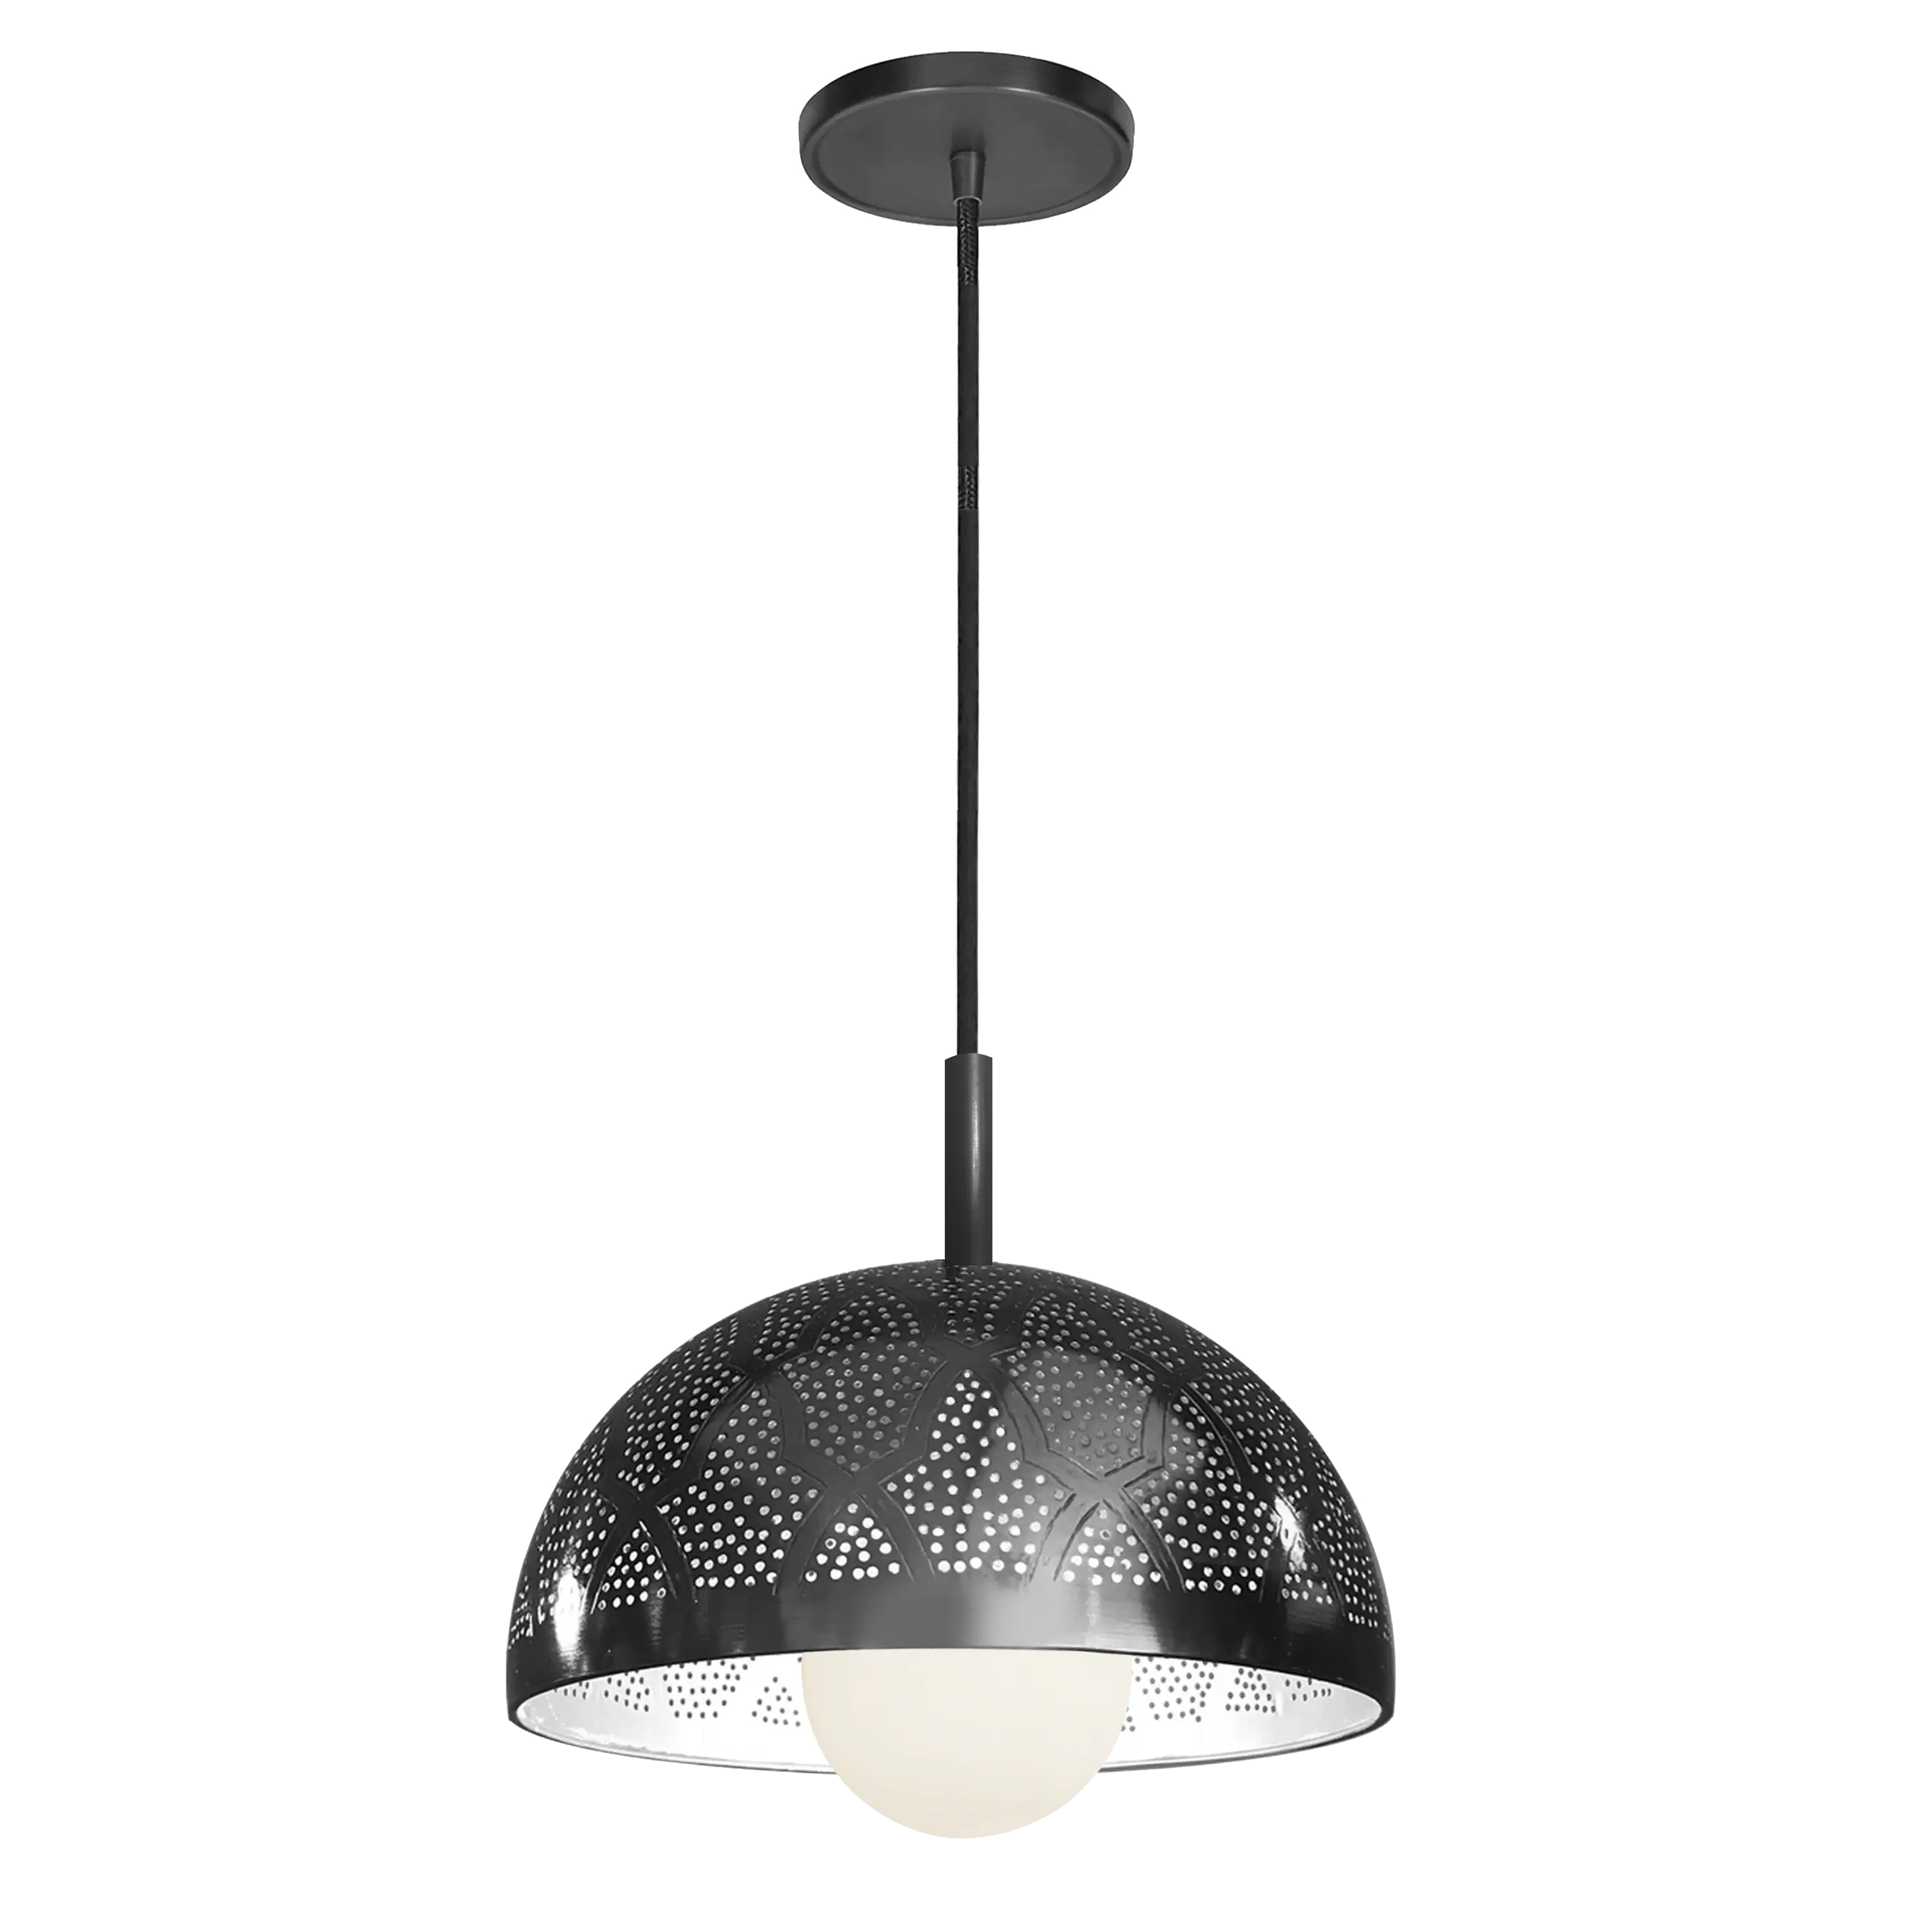 Dounia home Pendant light in black made of Metal, Model: Zana Dome